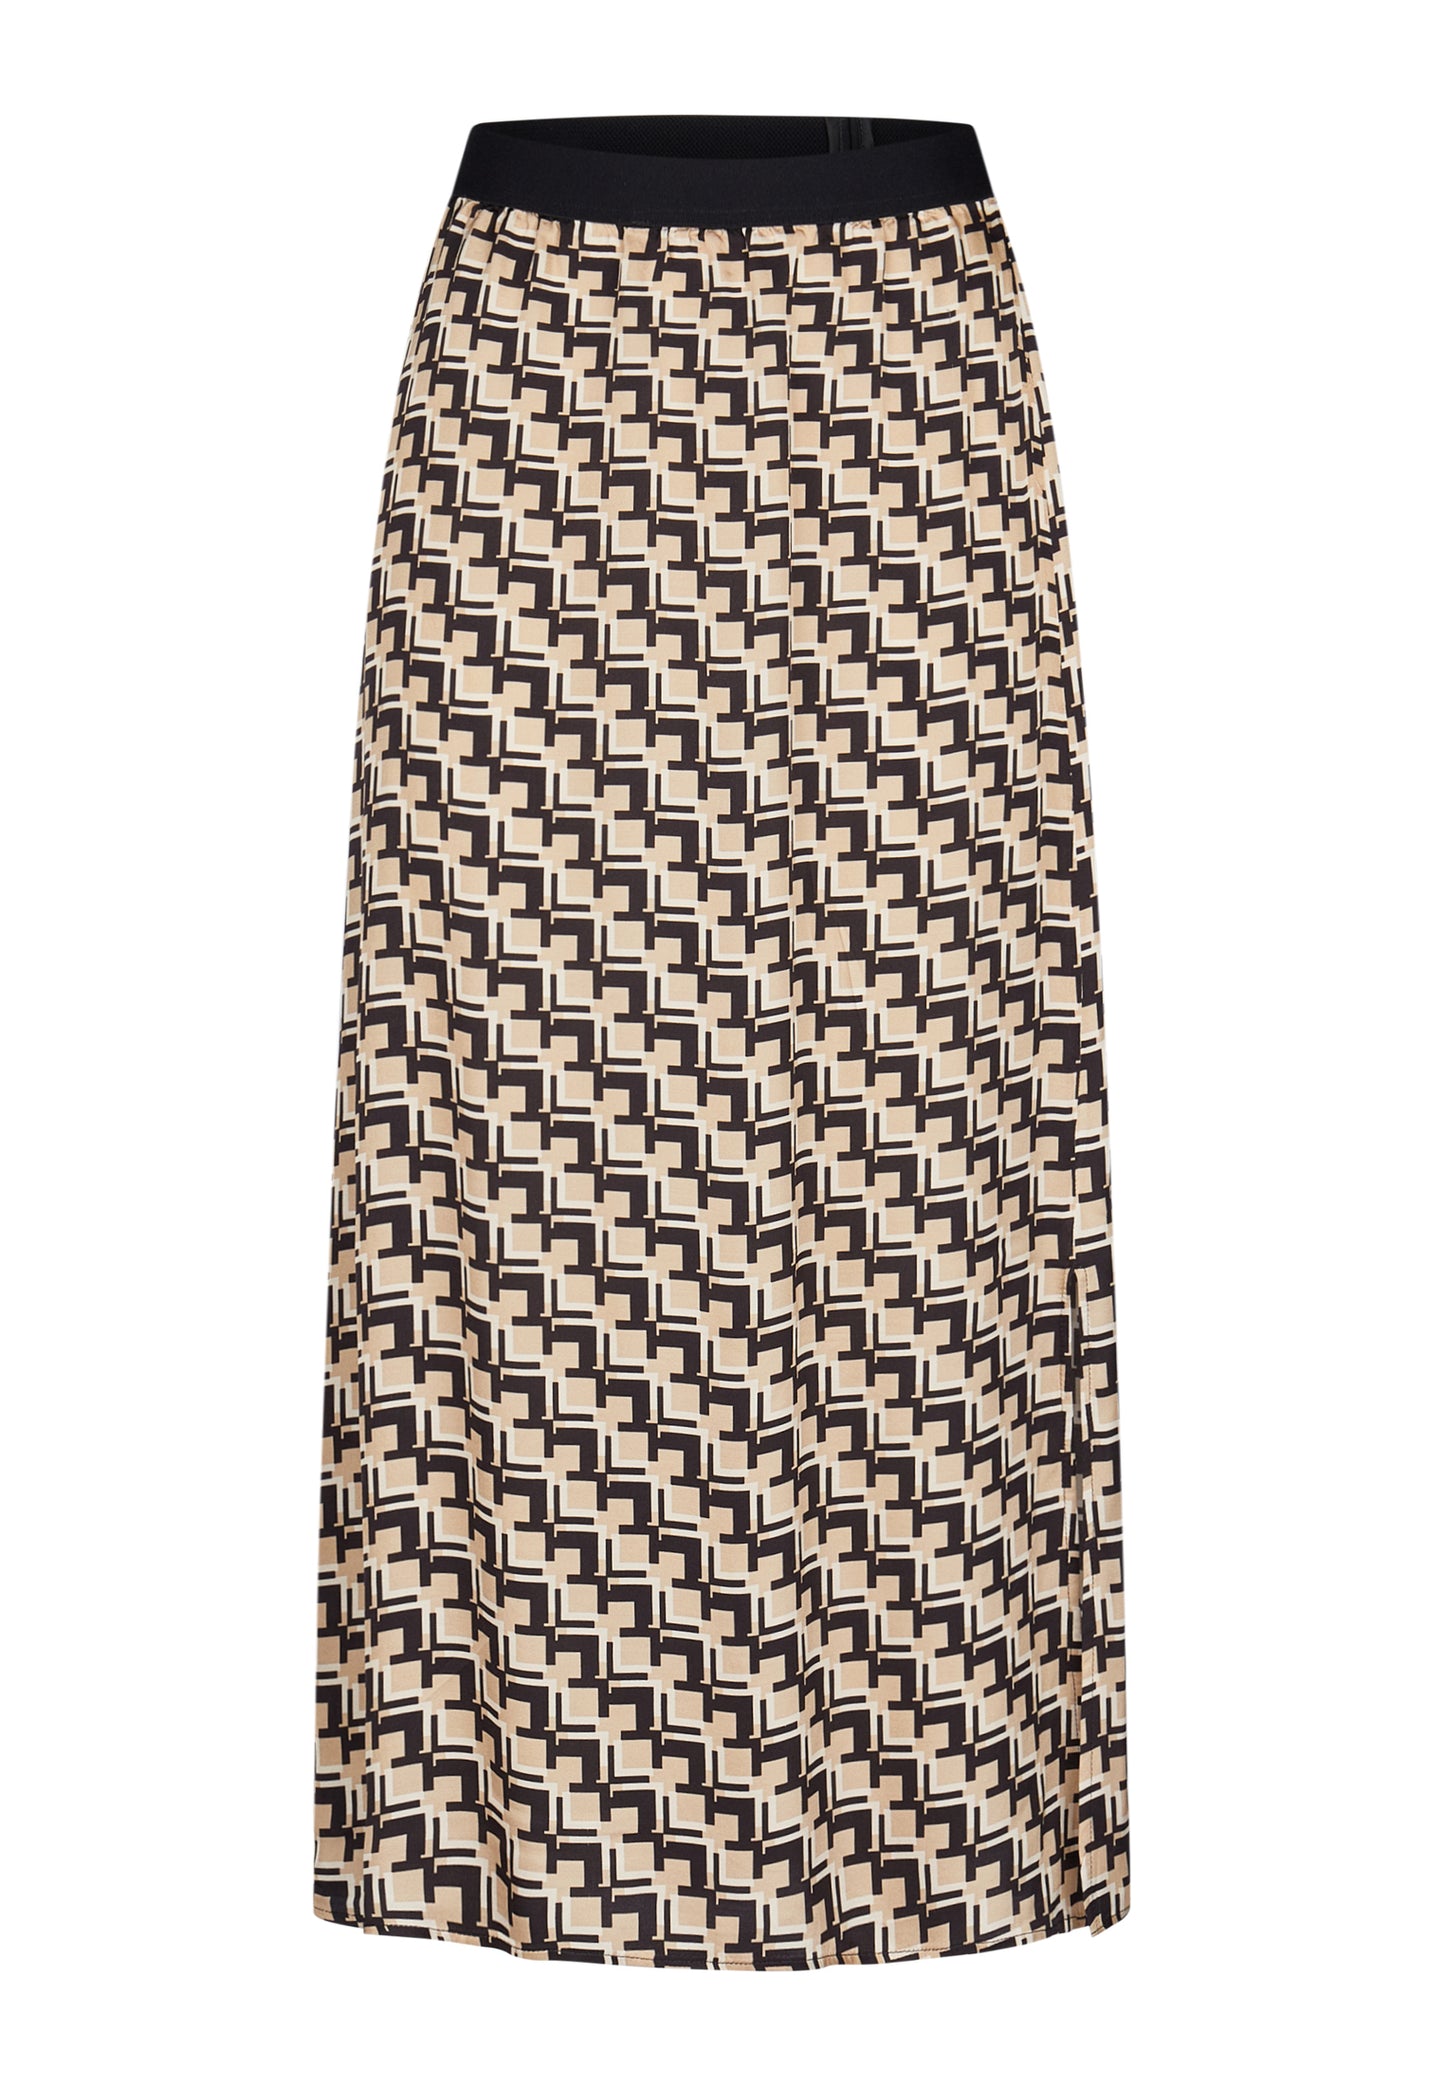 Marc Aurel Sand Varied Skirt